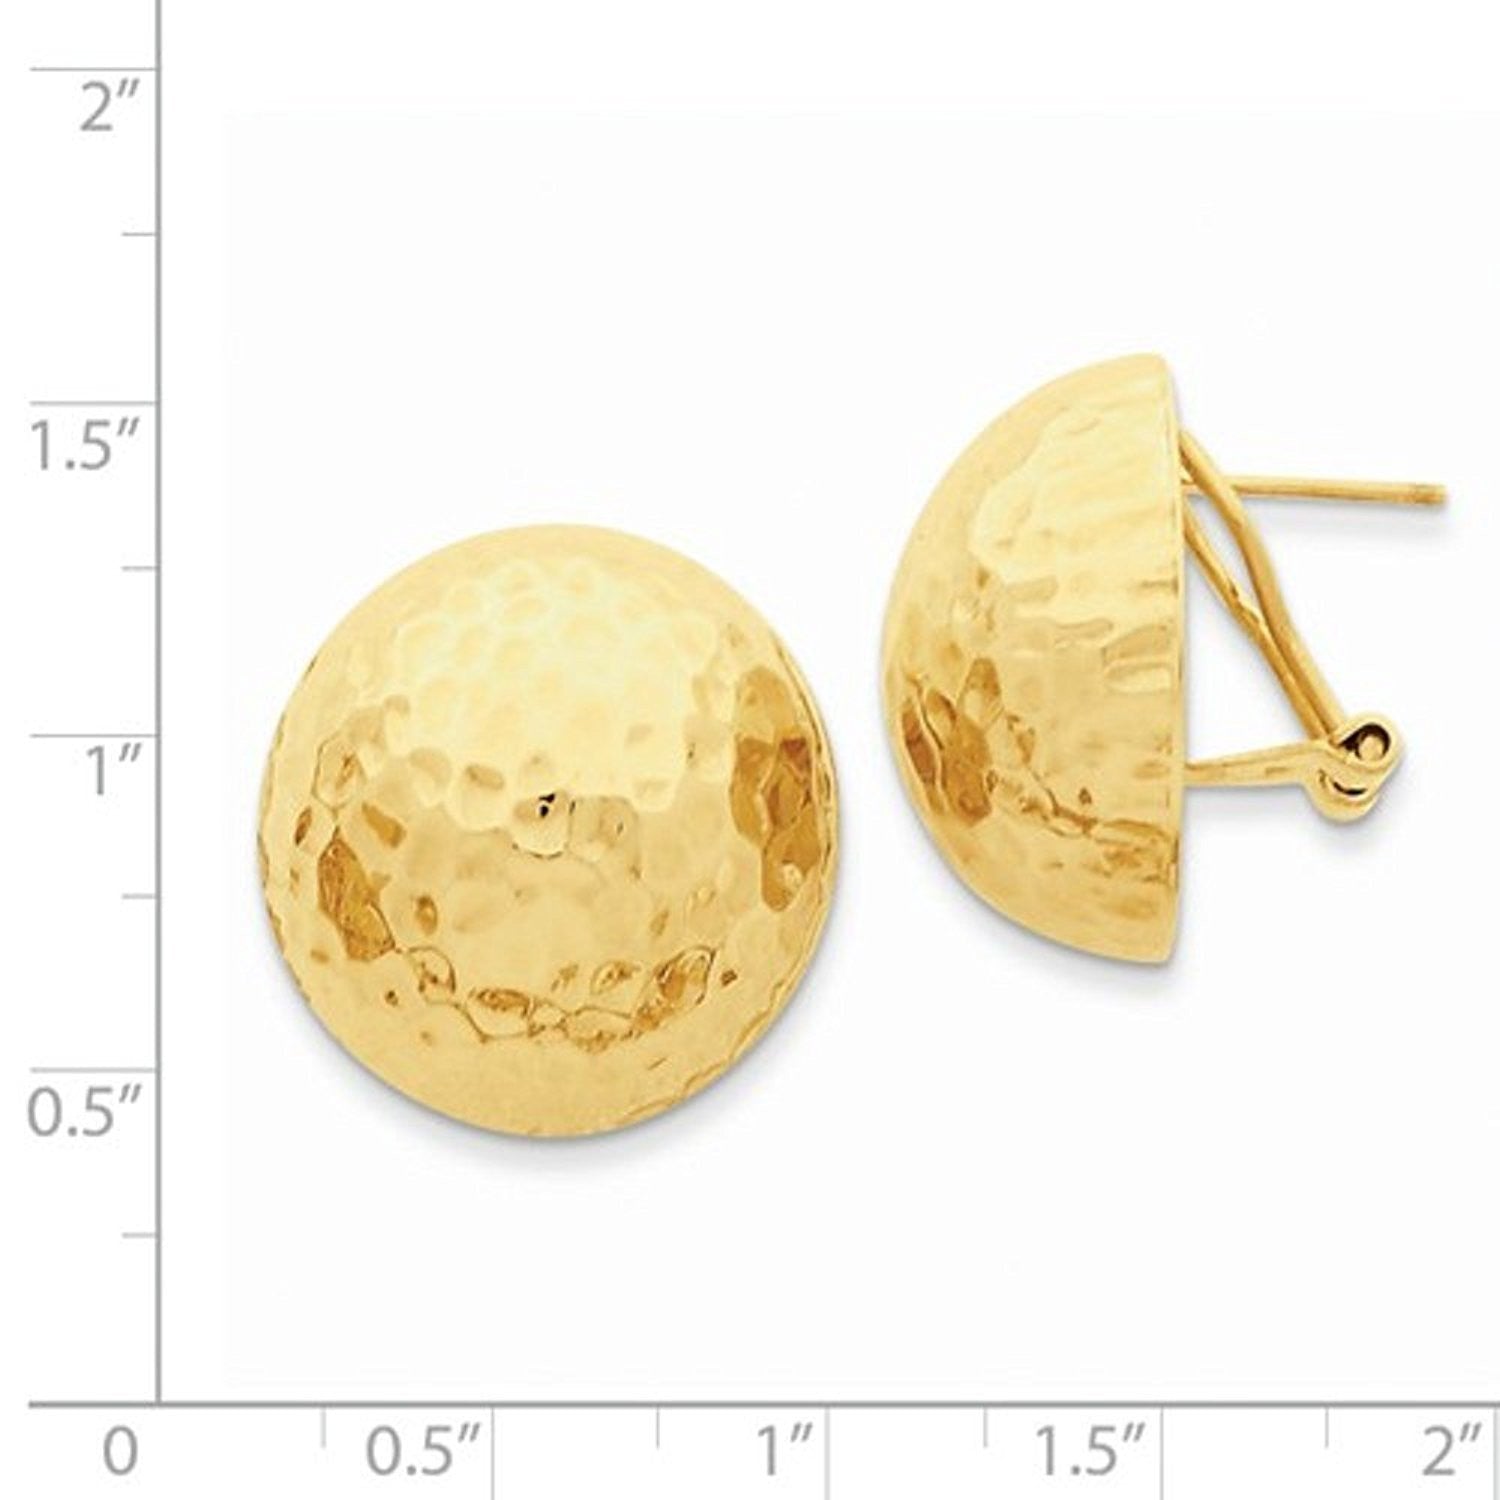 14k Yellow Gold Hammered 22mm Half Ball Omega Post Earrings